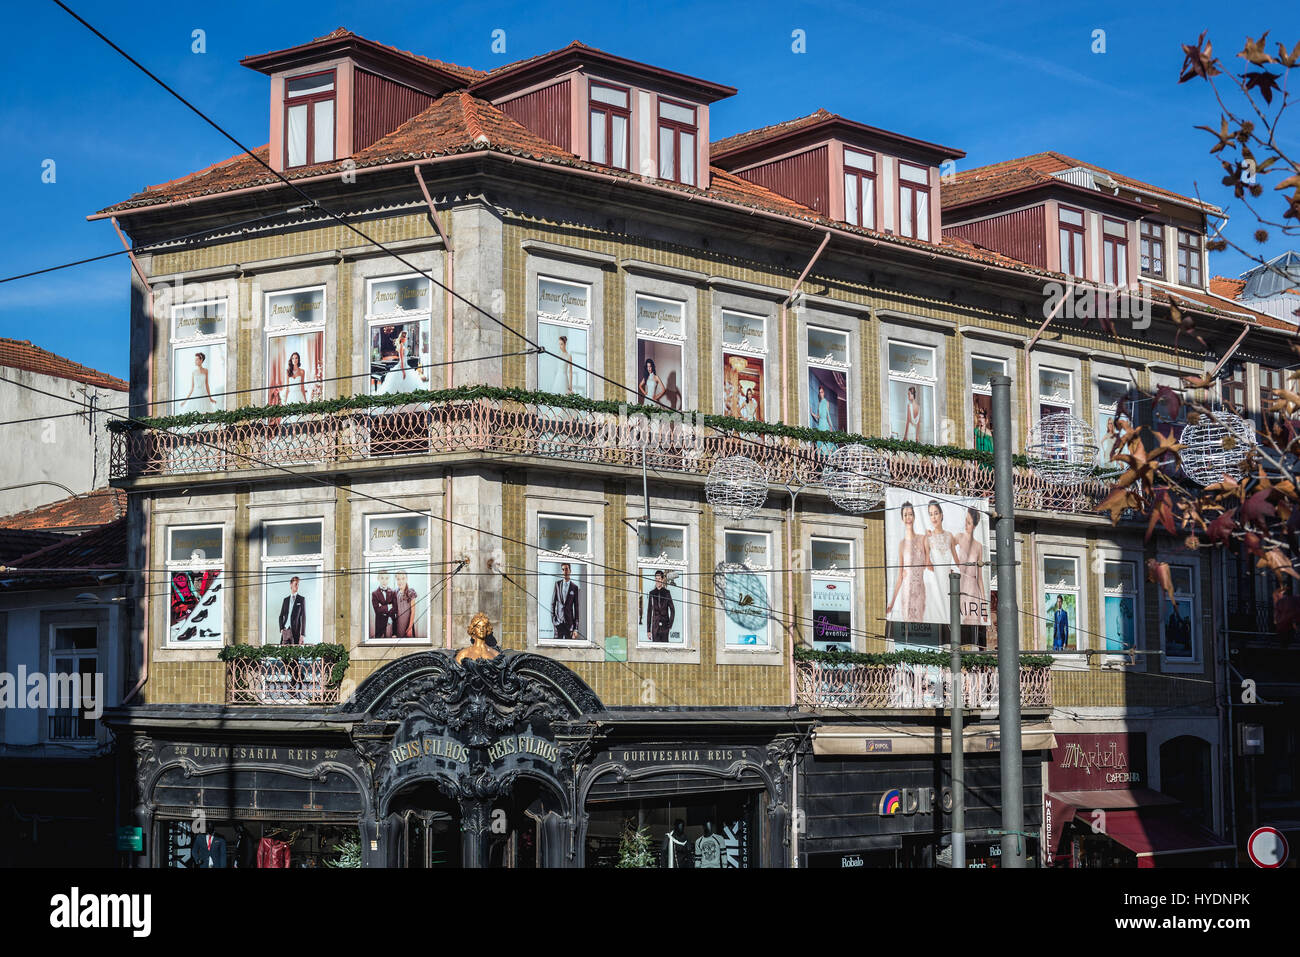 Building with old Reis & Filhos store on Rua de 31 de Janeiro (January 31 Street) in Santo Ildefonso civil parish of Porto city in Portugal Stock Photo